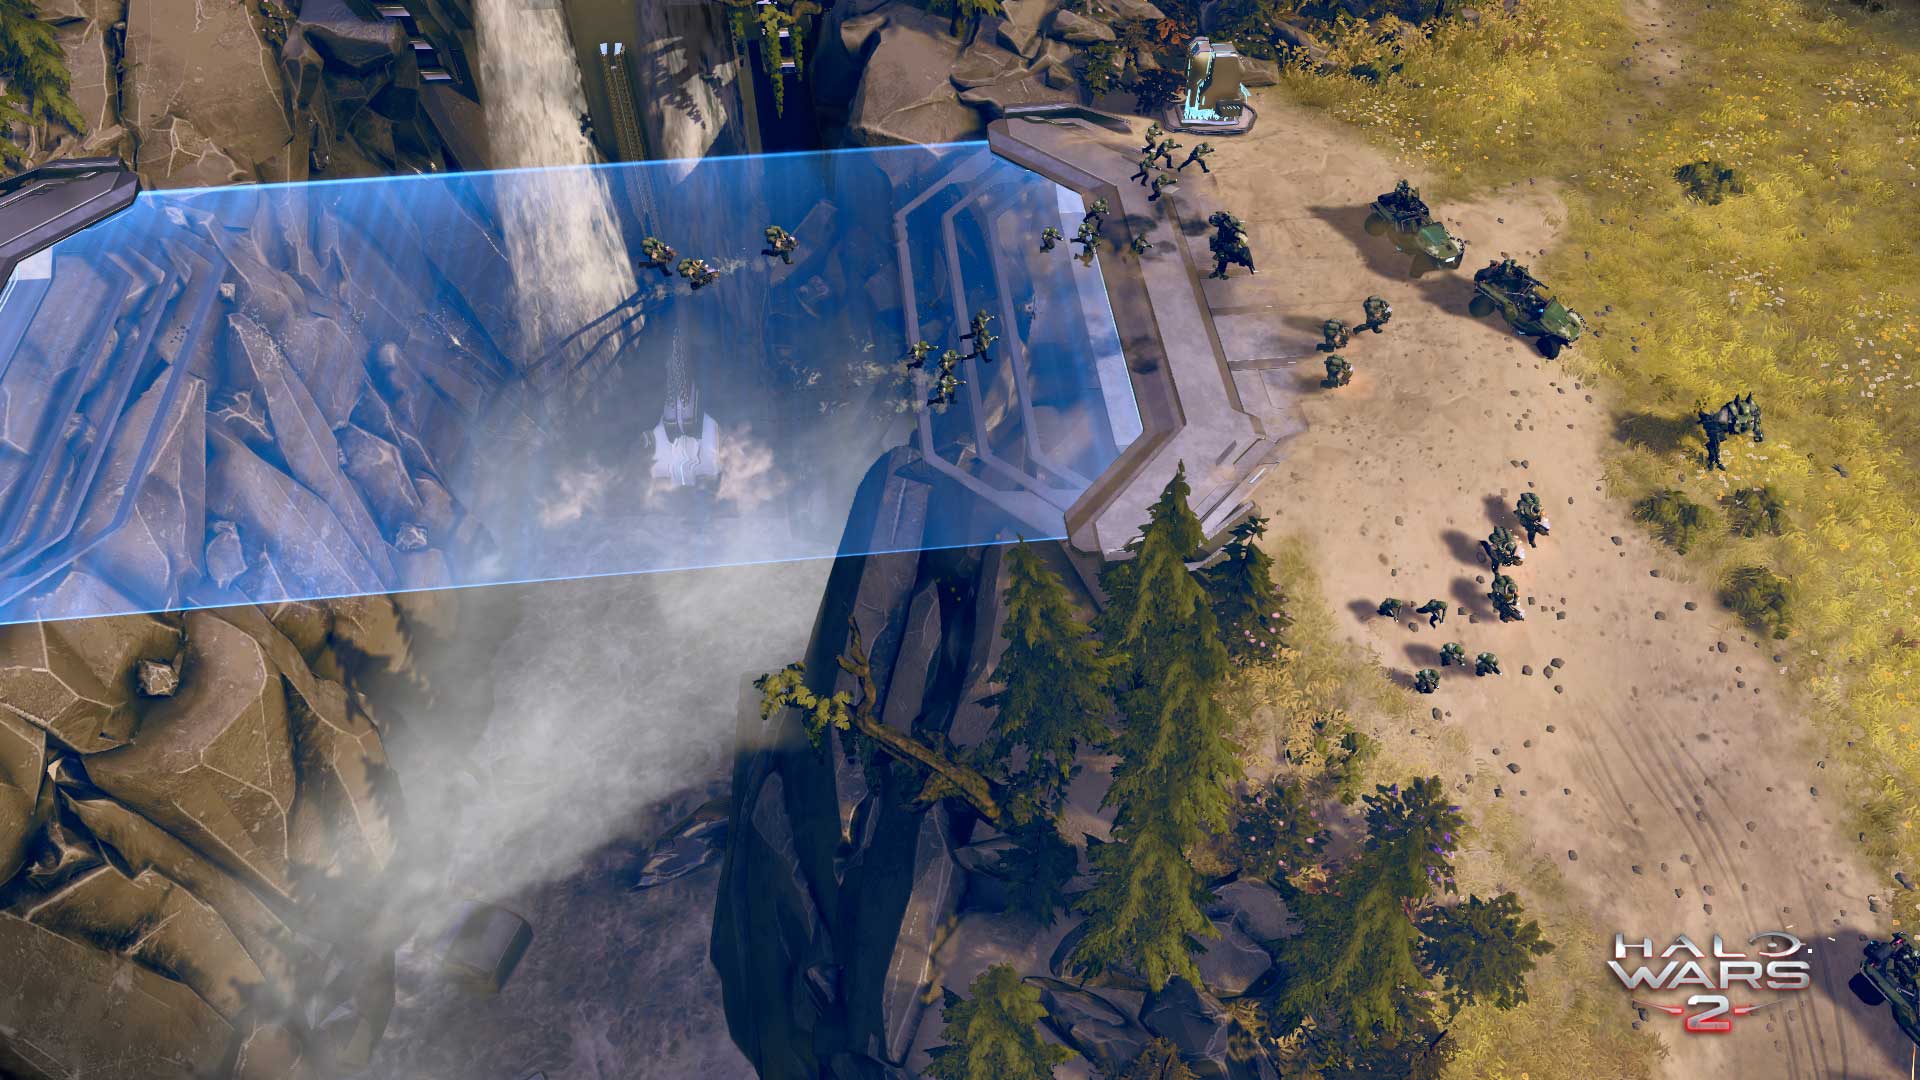 Bridge in Halo Wars 2